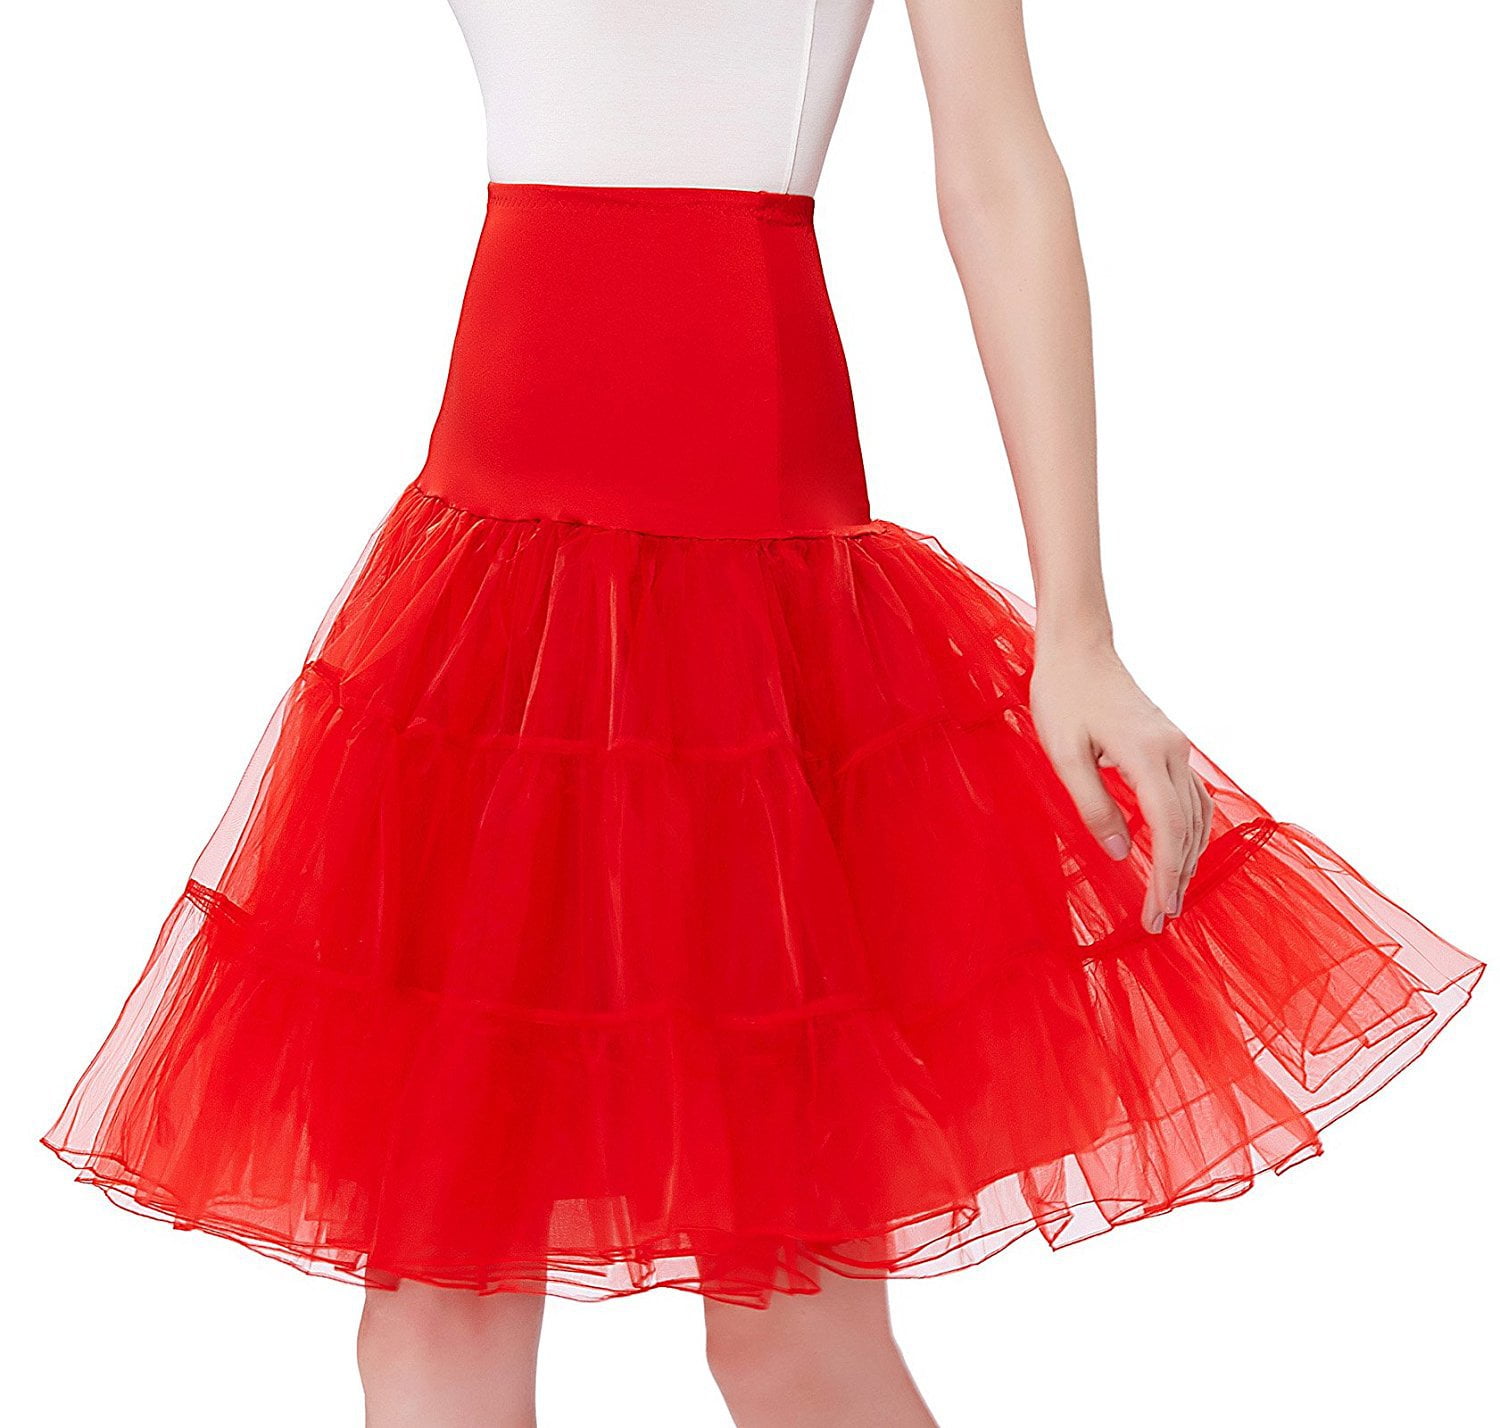 26'' 50s Vintage Petticoat Crinoline Underskirt Rockabilly Swing Tutu Skirt SliP 